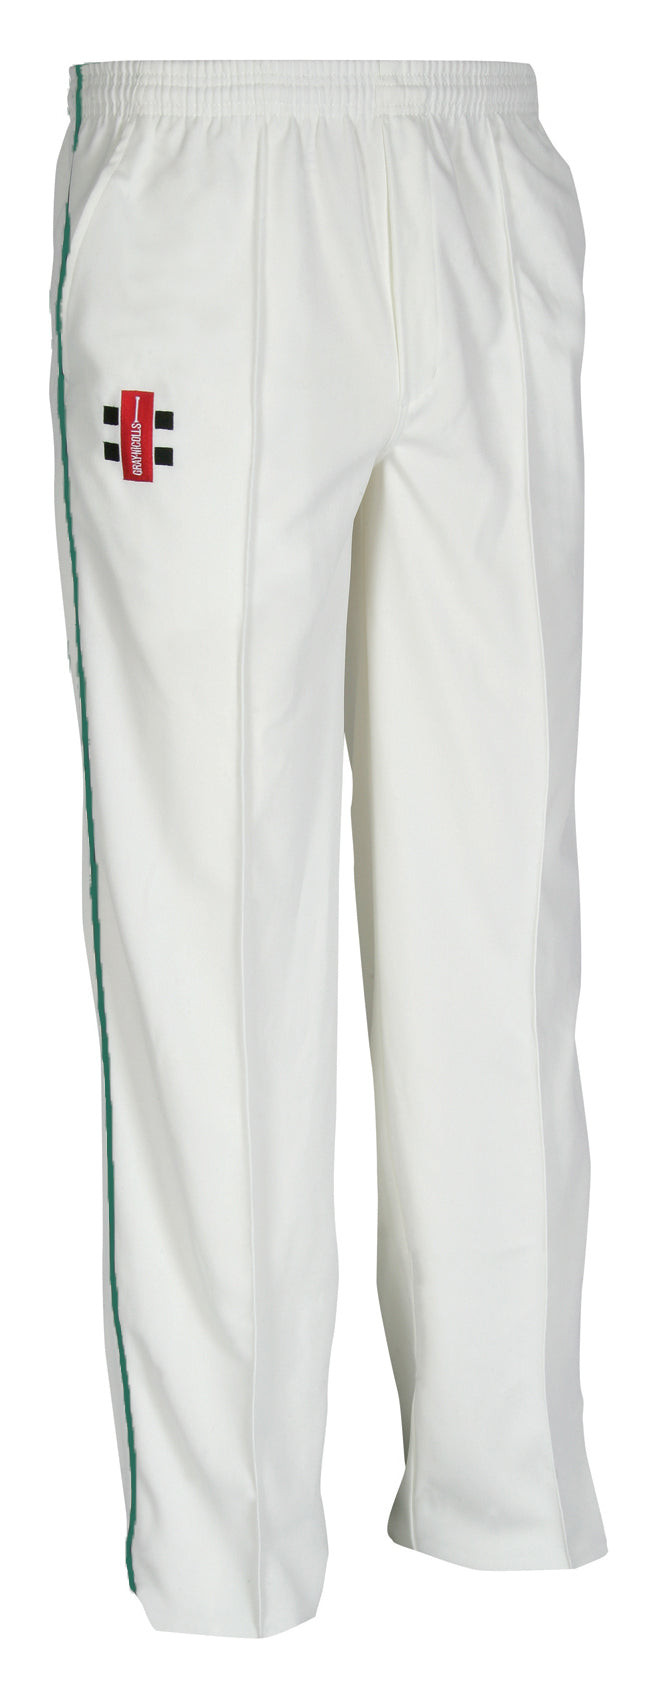 Overbury CC Matrix Cricket Trouser